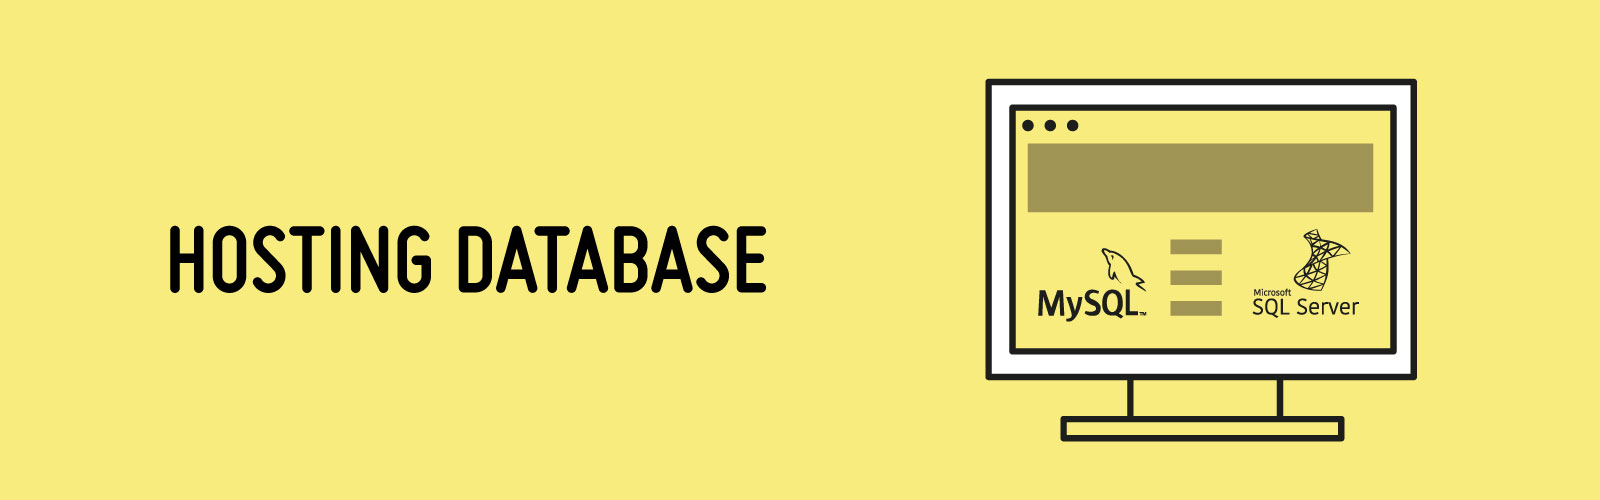 Database per servizi di Hosting